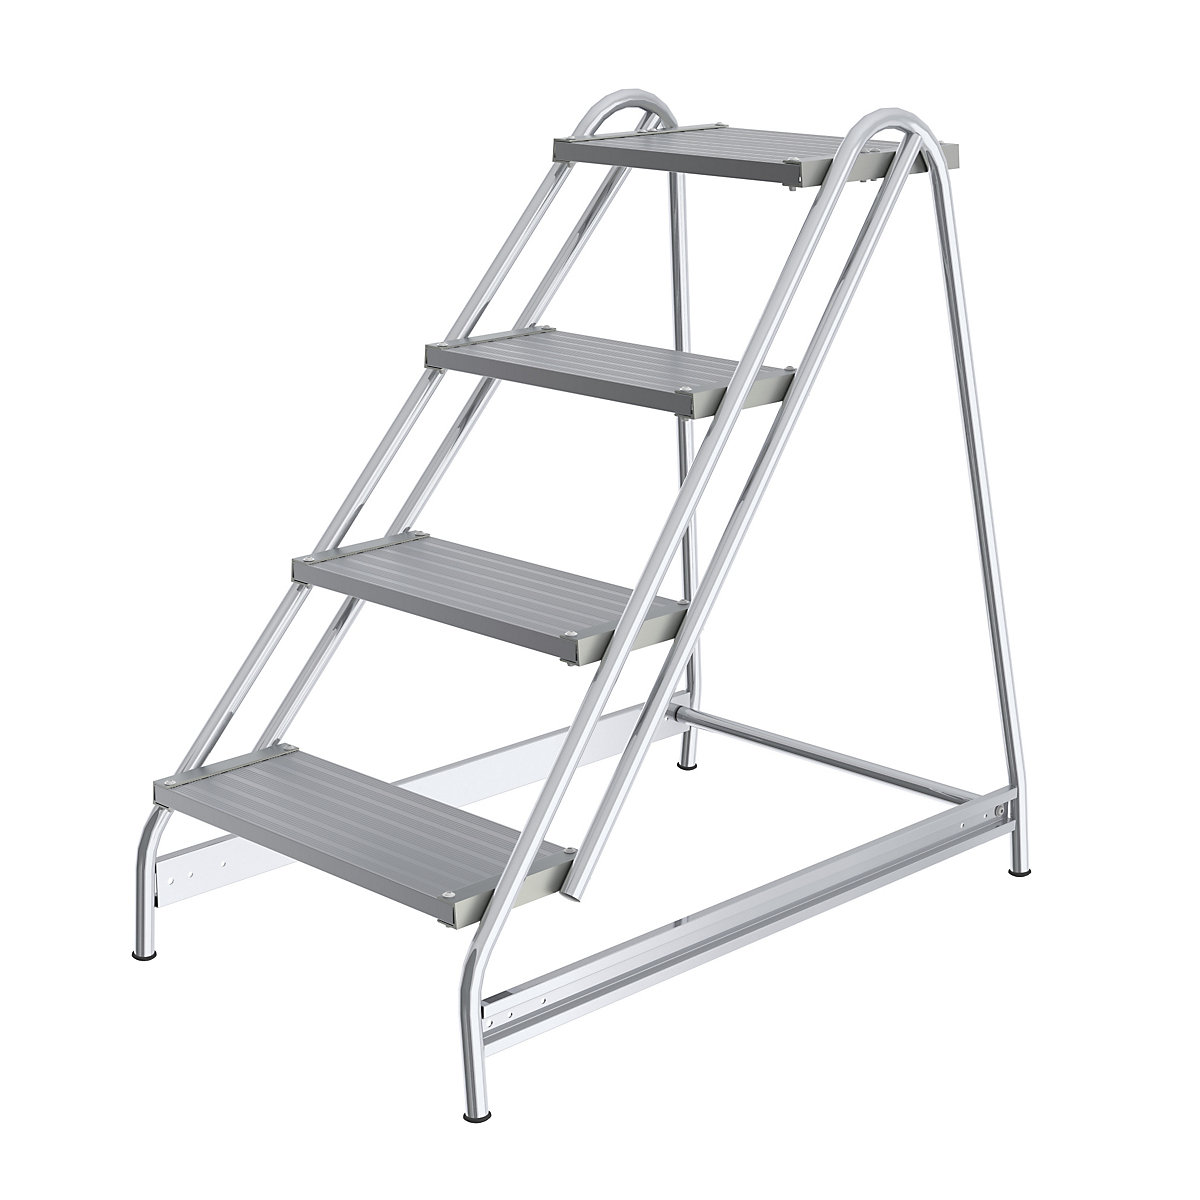 Aluminium work platform – MUNK, steps made of ribbed aluminium, single sided access, 4 steps